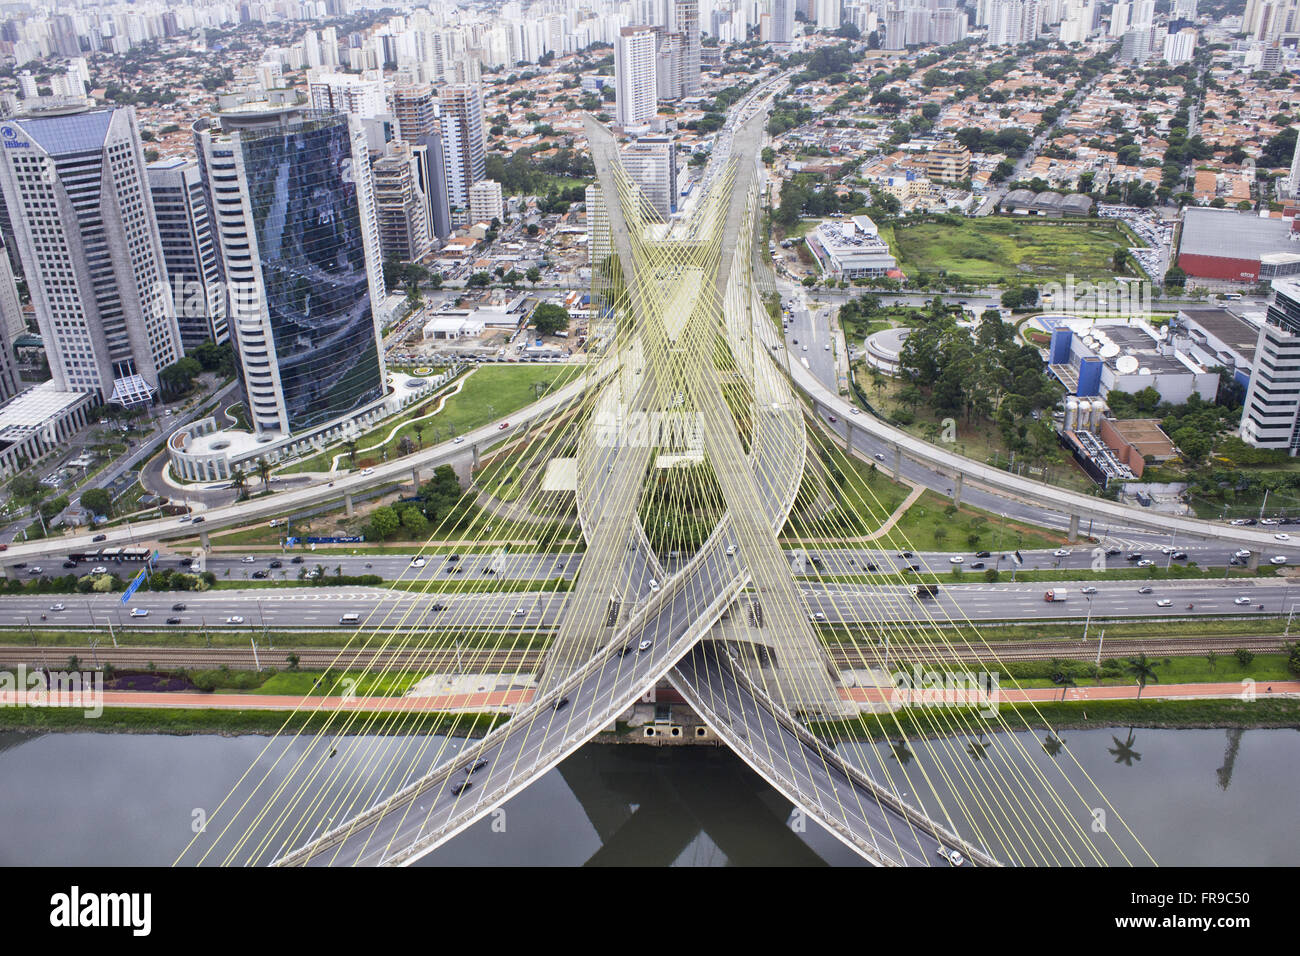 Aerial view of the Cable-Stayed Bridge Octavio Frias de Oliveira on the river Pinheiros - Brooklin neighborhood Stock Photo